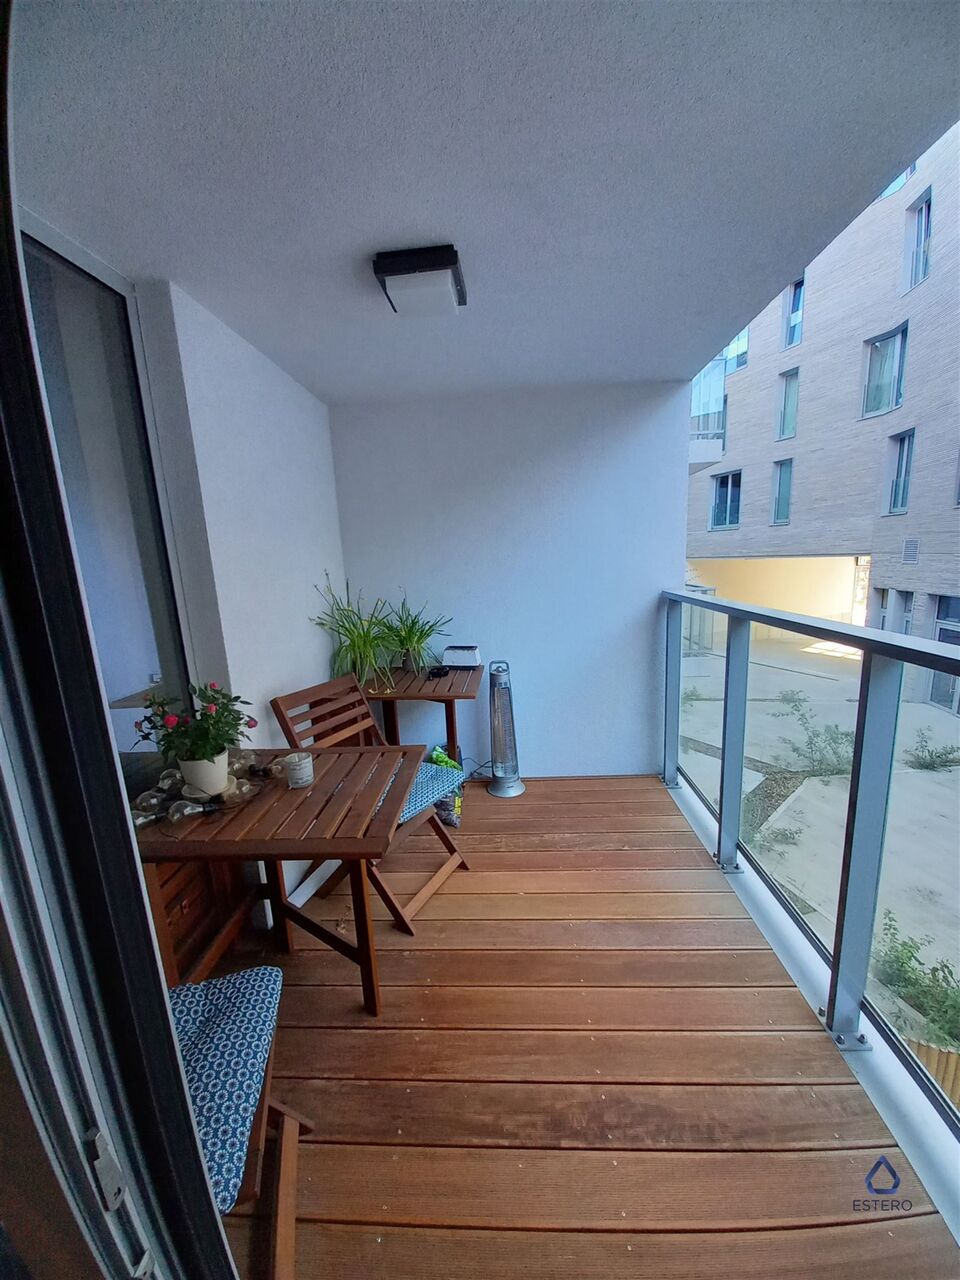 Modern appartement met terras in hartje Brussel foto 8